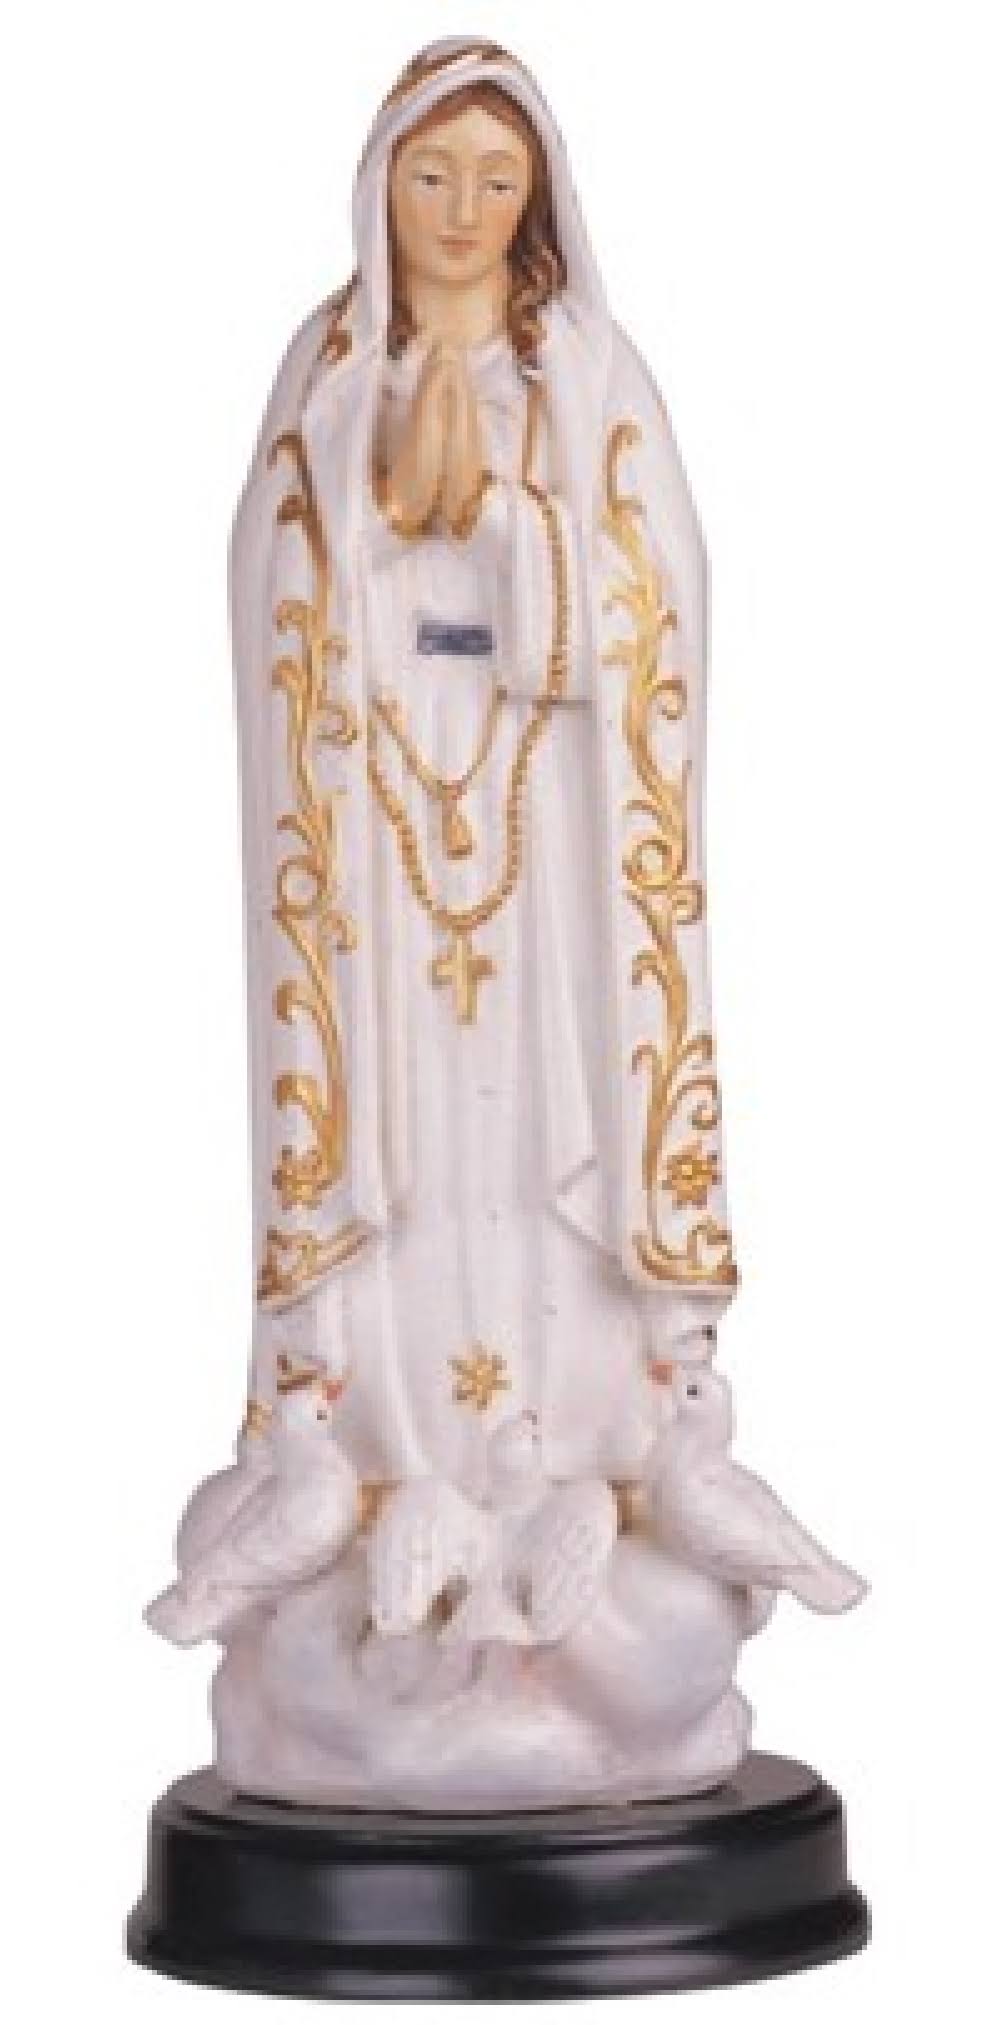 Stealstreet Our Lady of Fatima Holy Figurine Religious Decoration Decor 5"